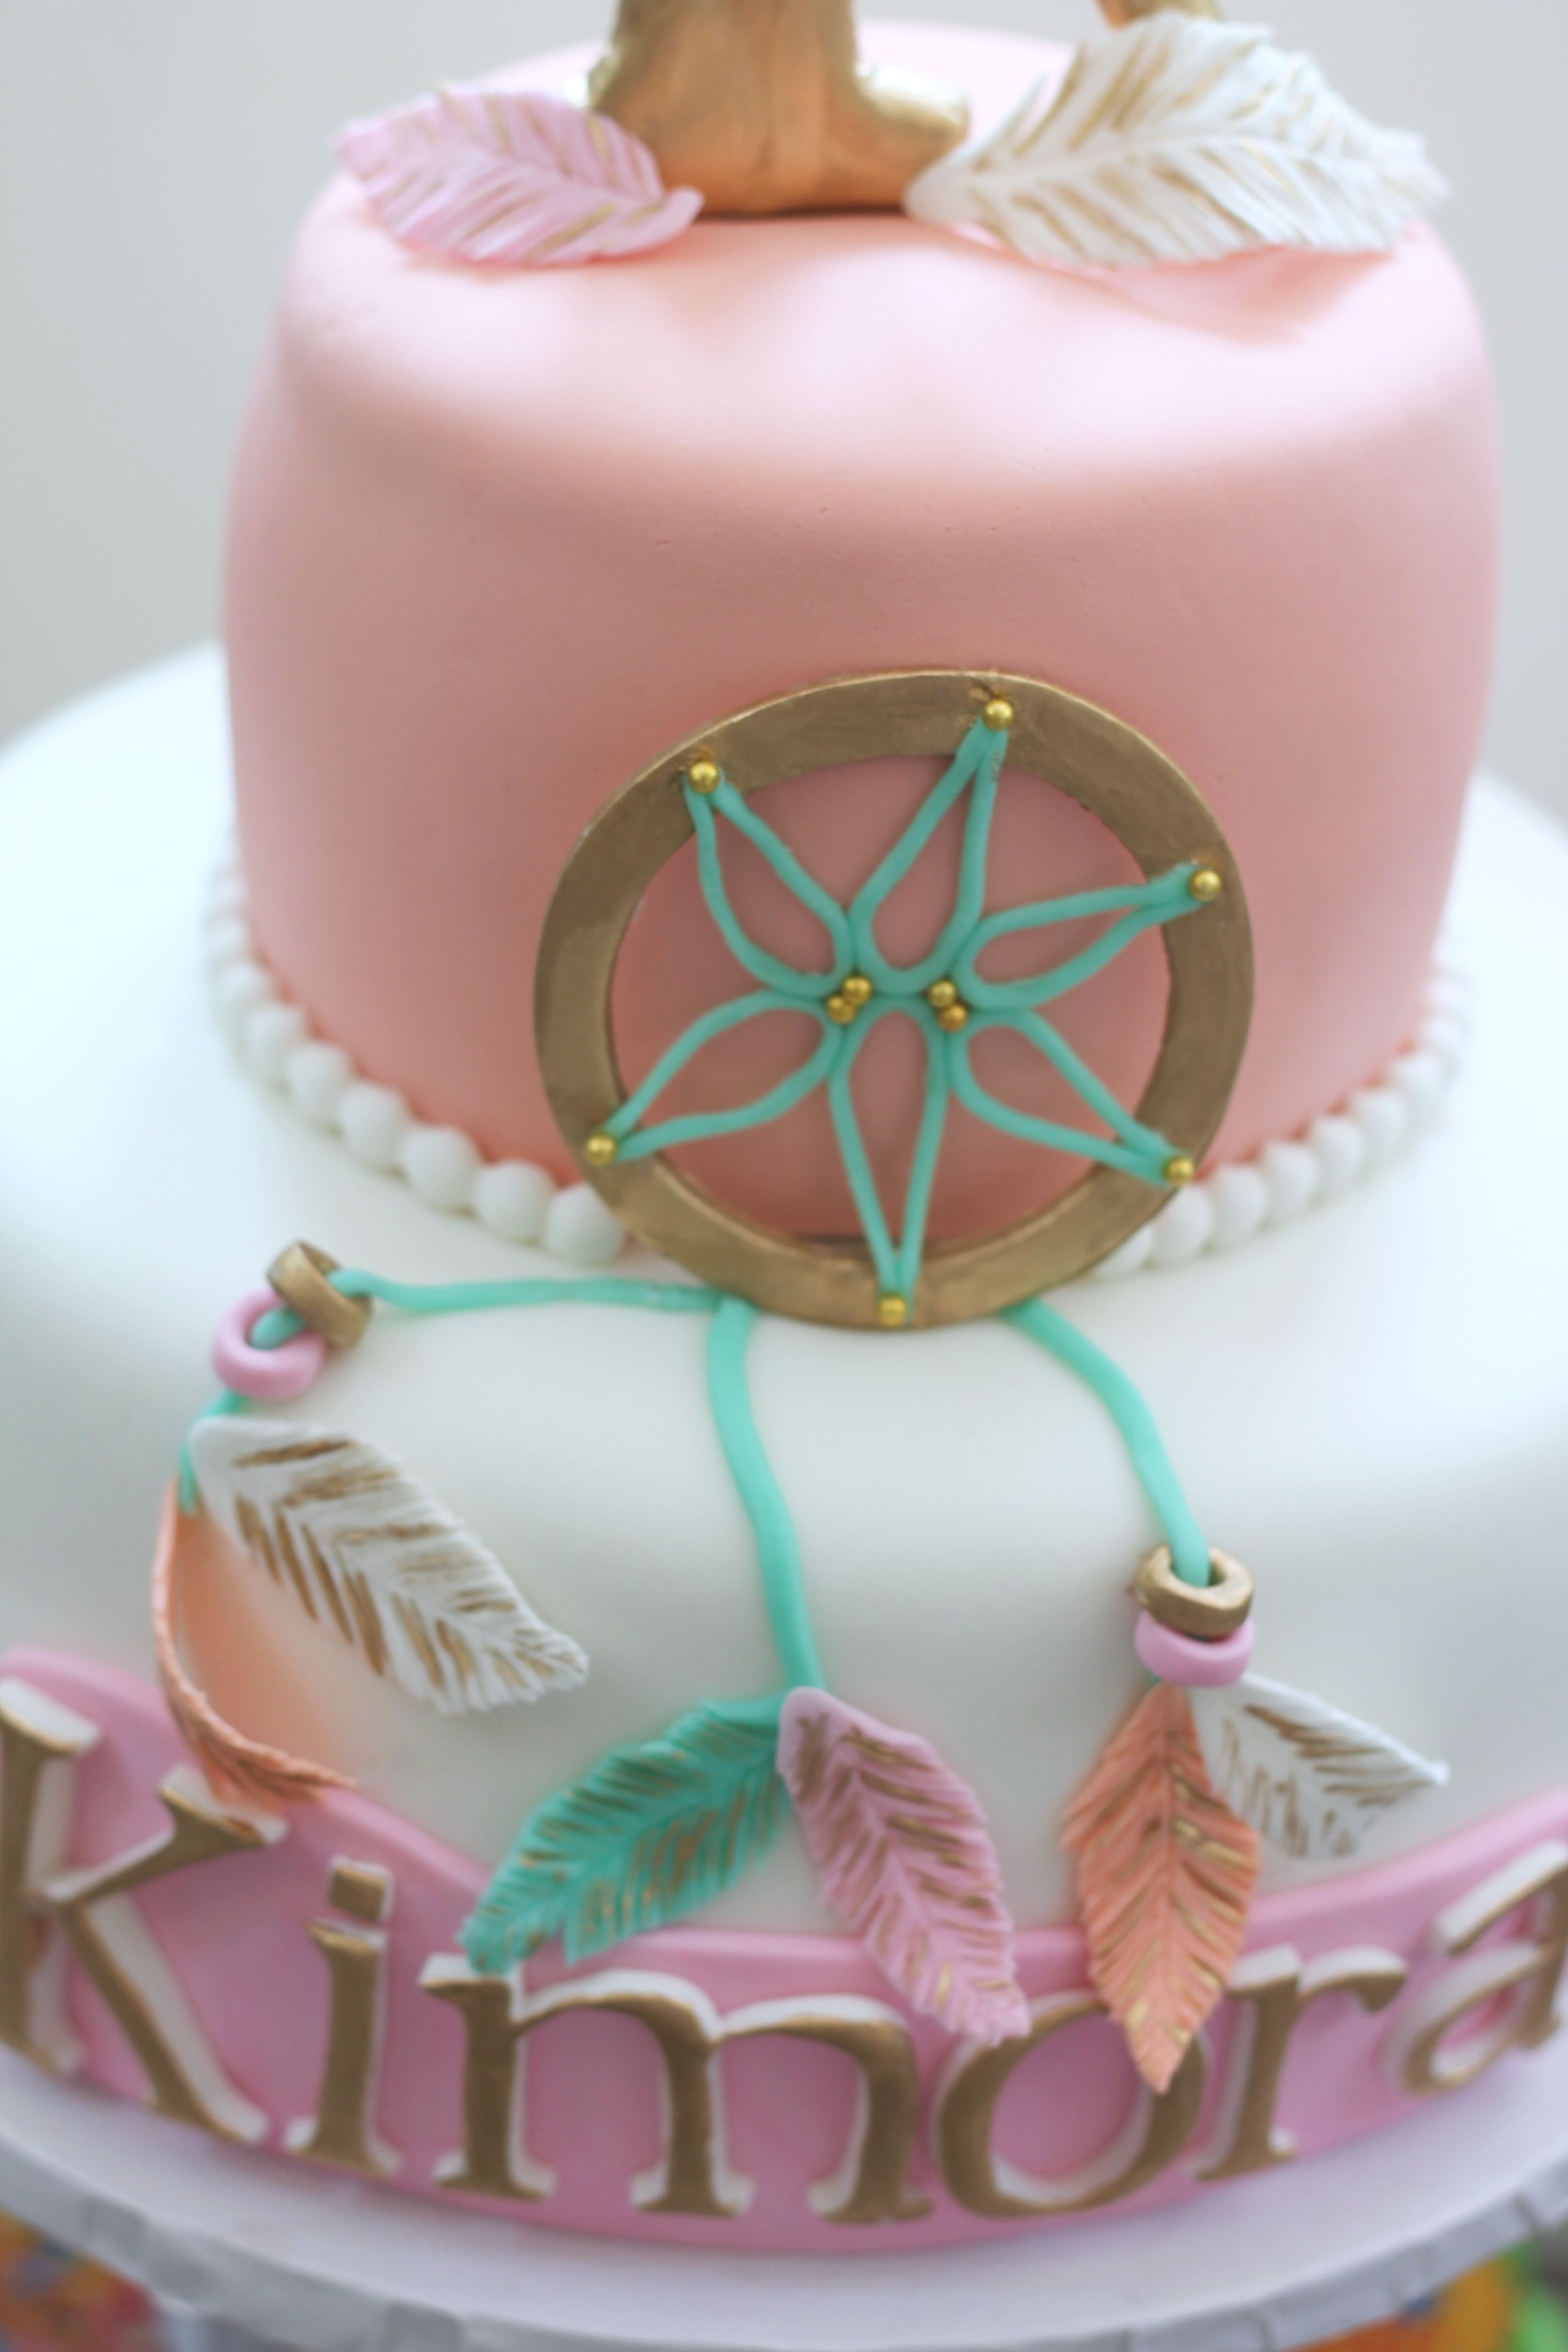 10 Great Cake Ideas For Teenage Girls dream catcher cake girl parties pinterest dream catchers 2022